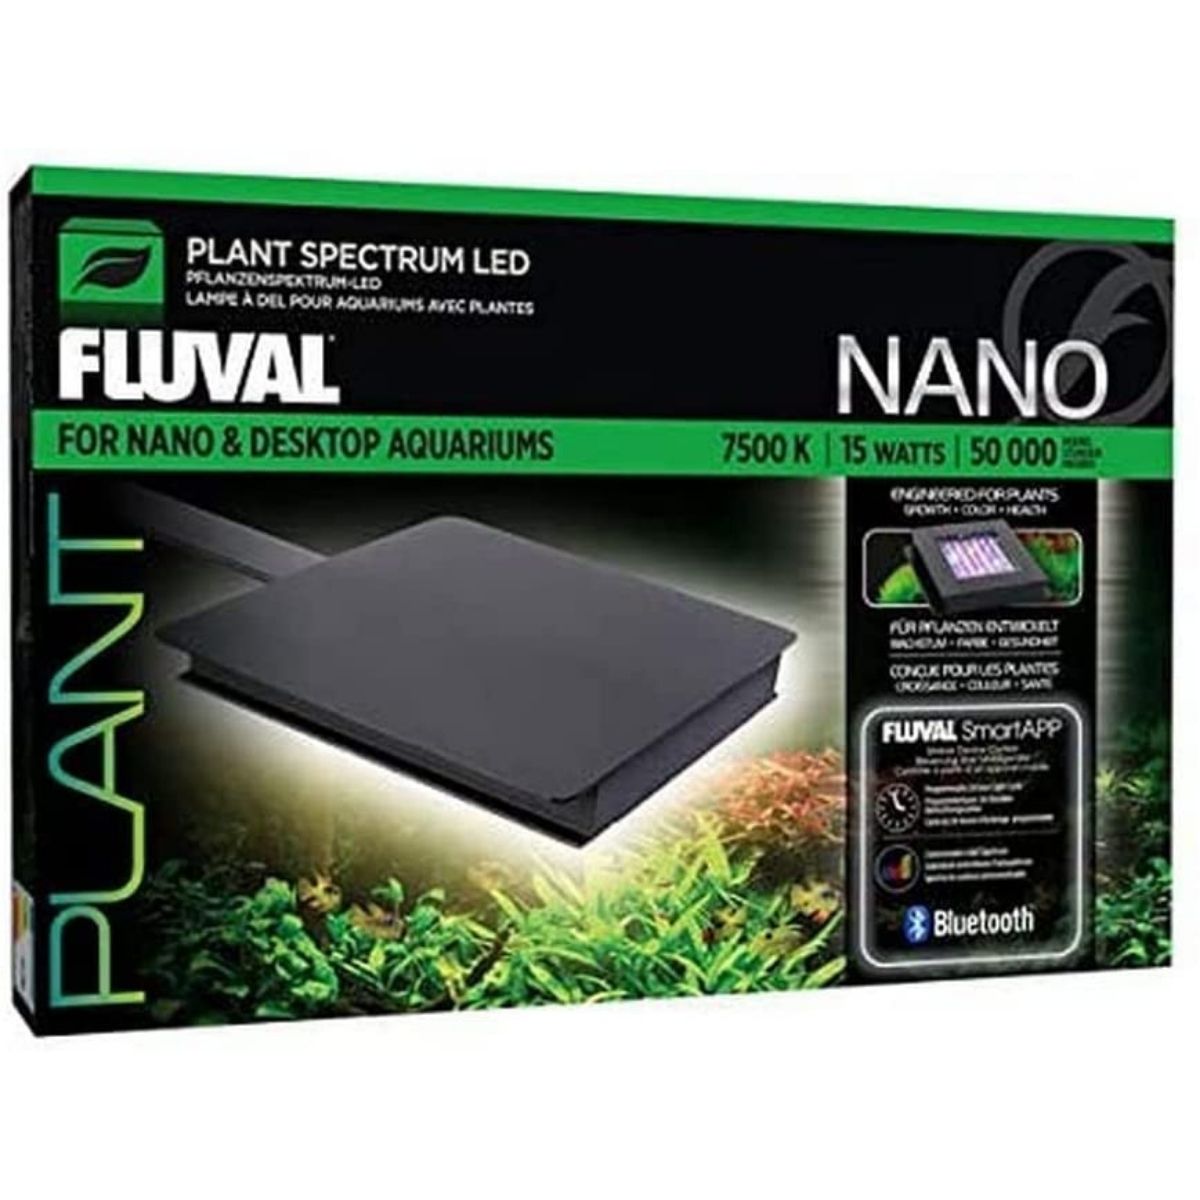 fluval plant nano led review